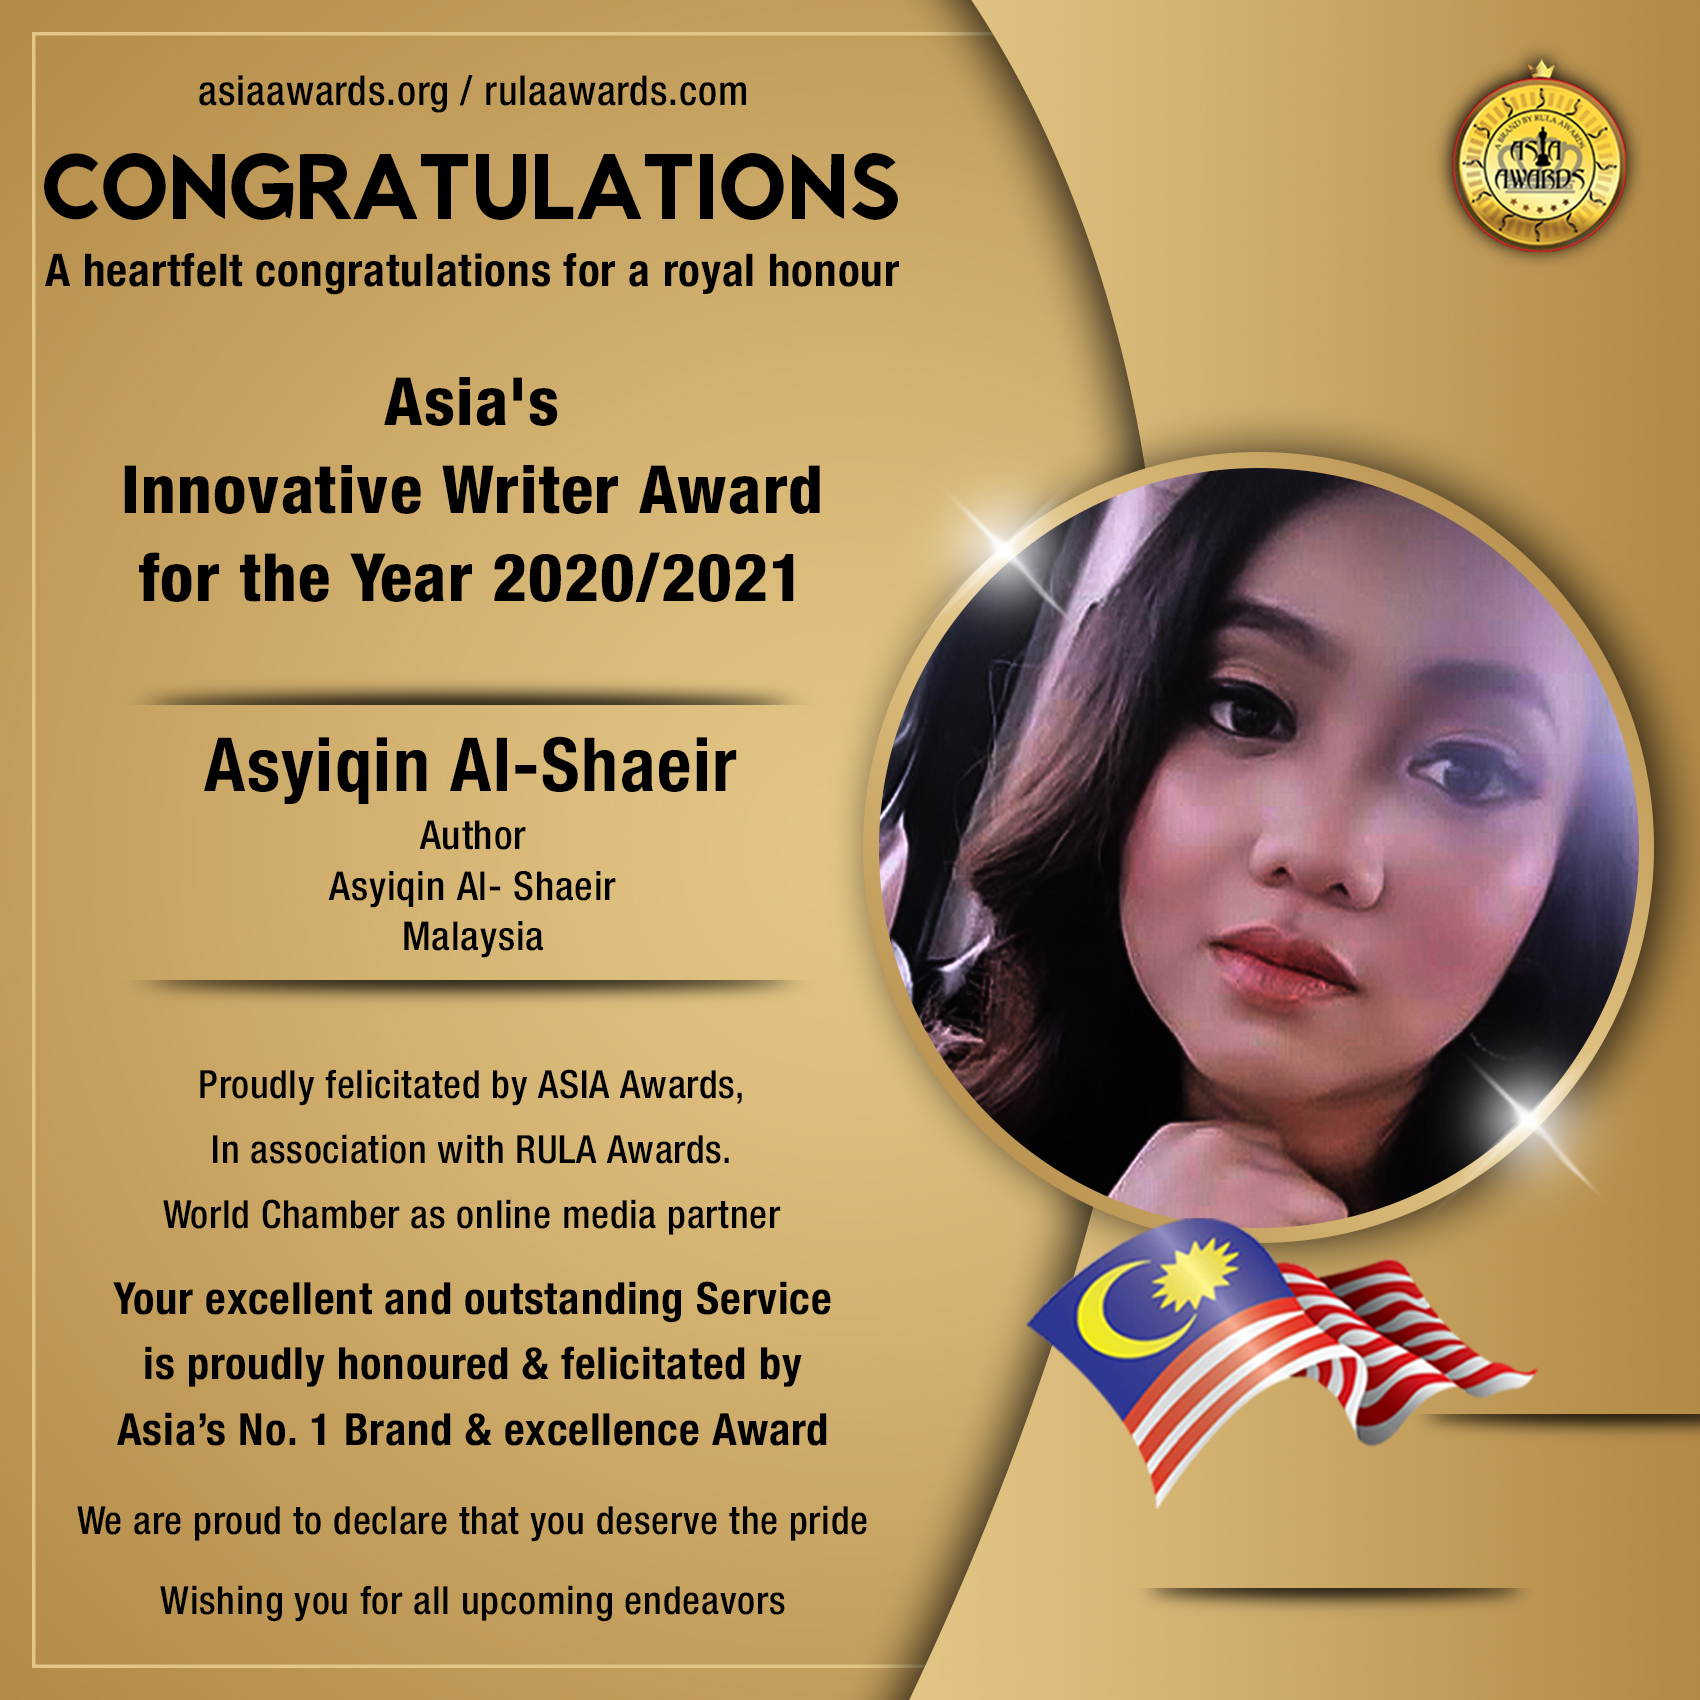 Asyiqin Al-Shaeir has bagged Asia's Innovative Writer Award